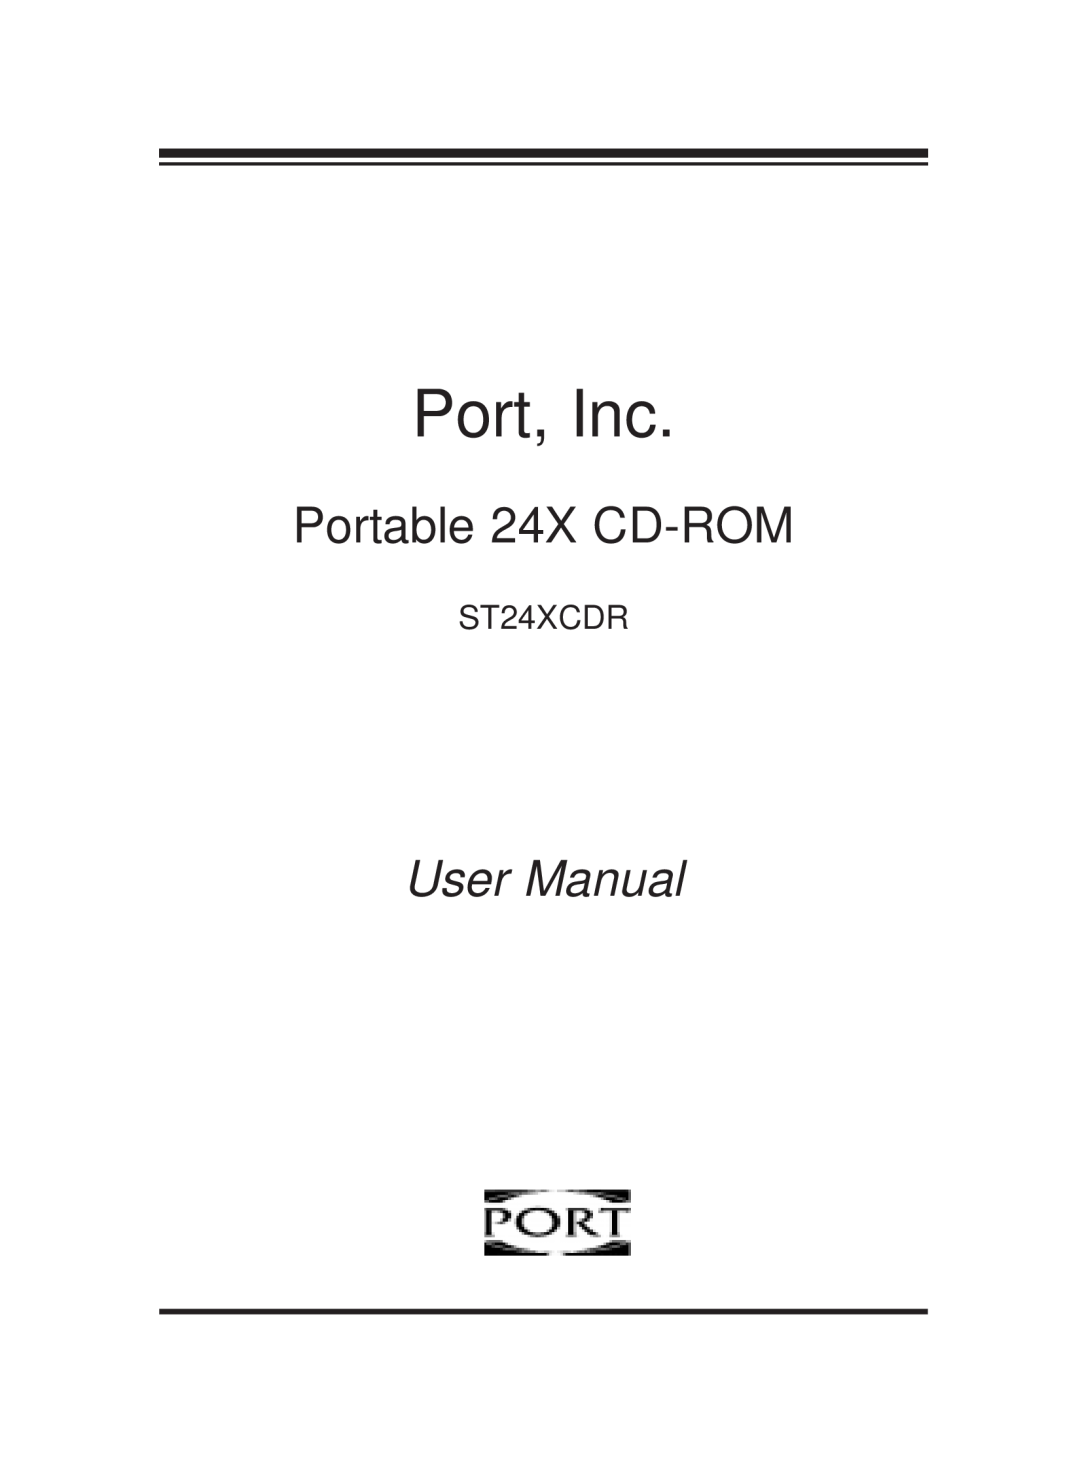 PORT ST24XCDR user manual Port, Inc, Portable 24X CD-ROM 